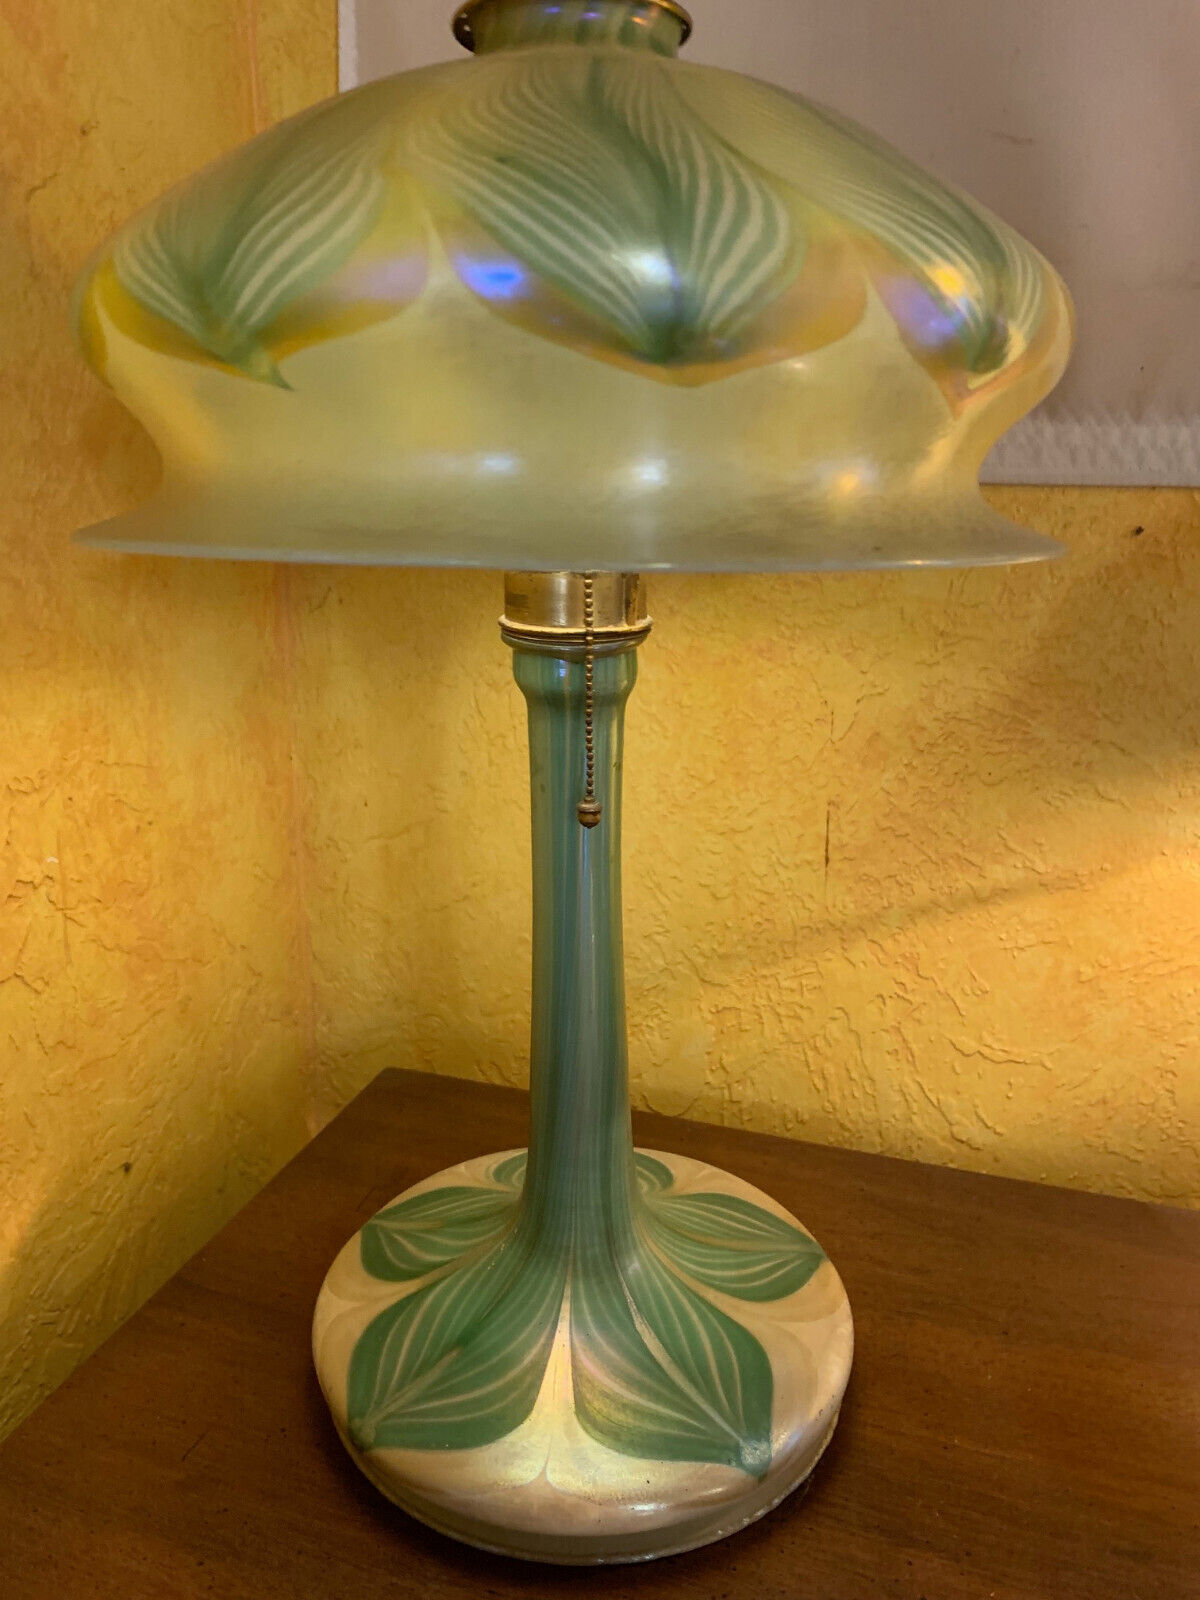 Tiffany Studios Favrile Table Lamp